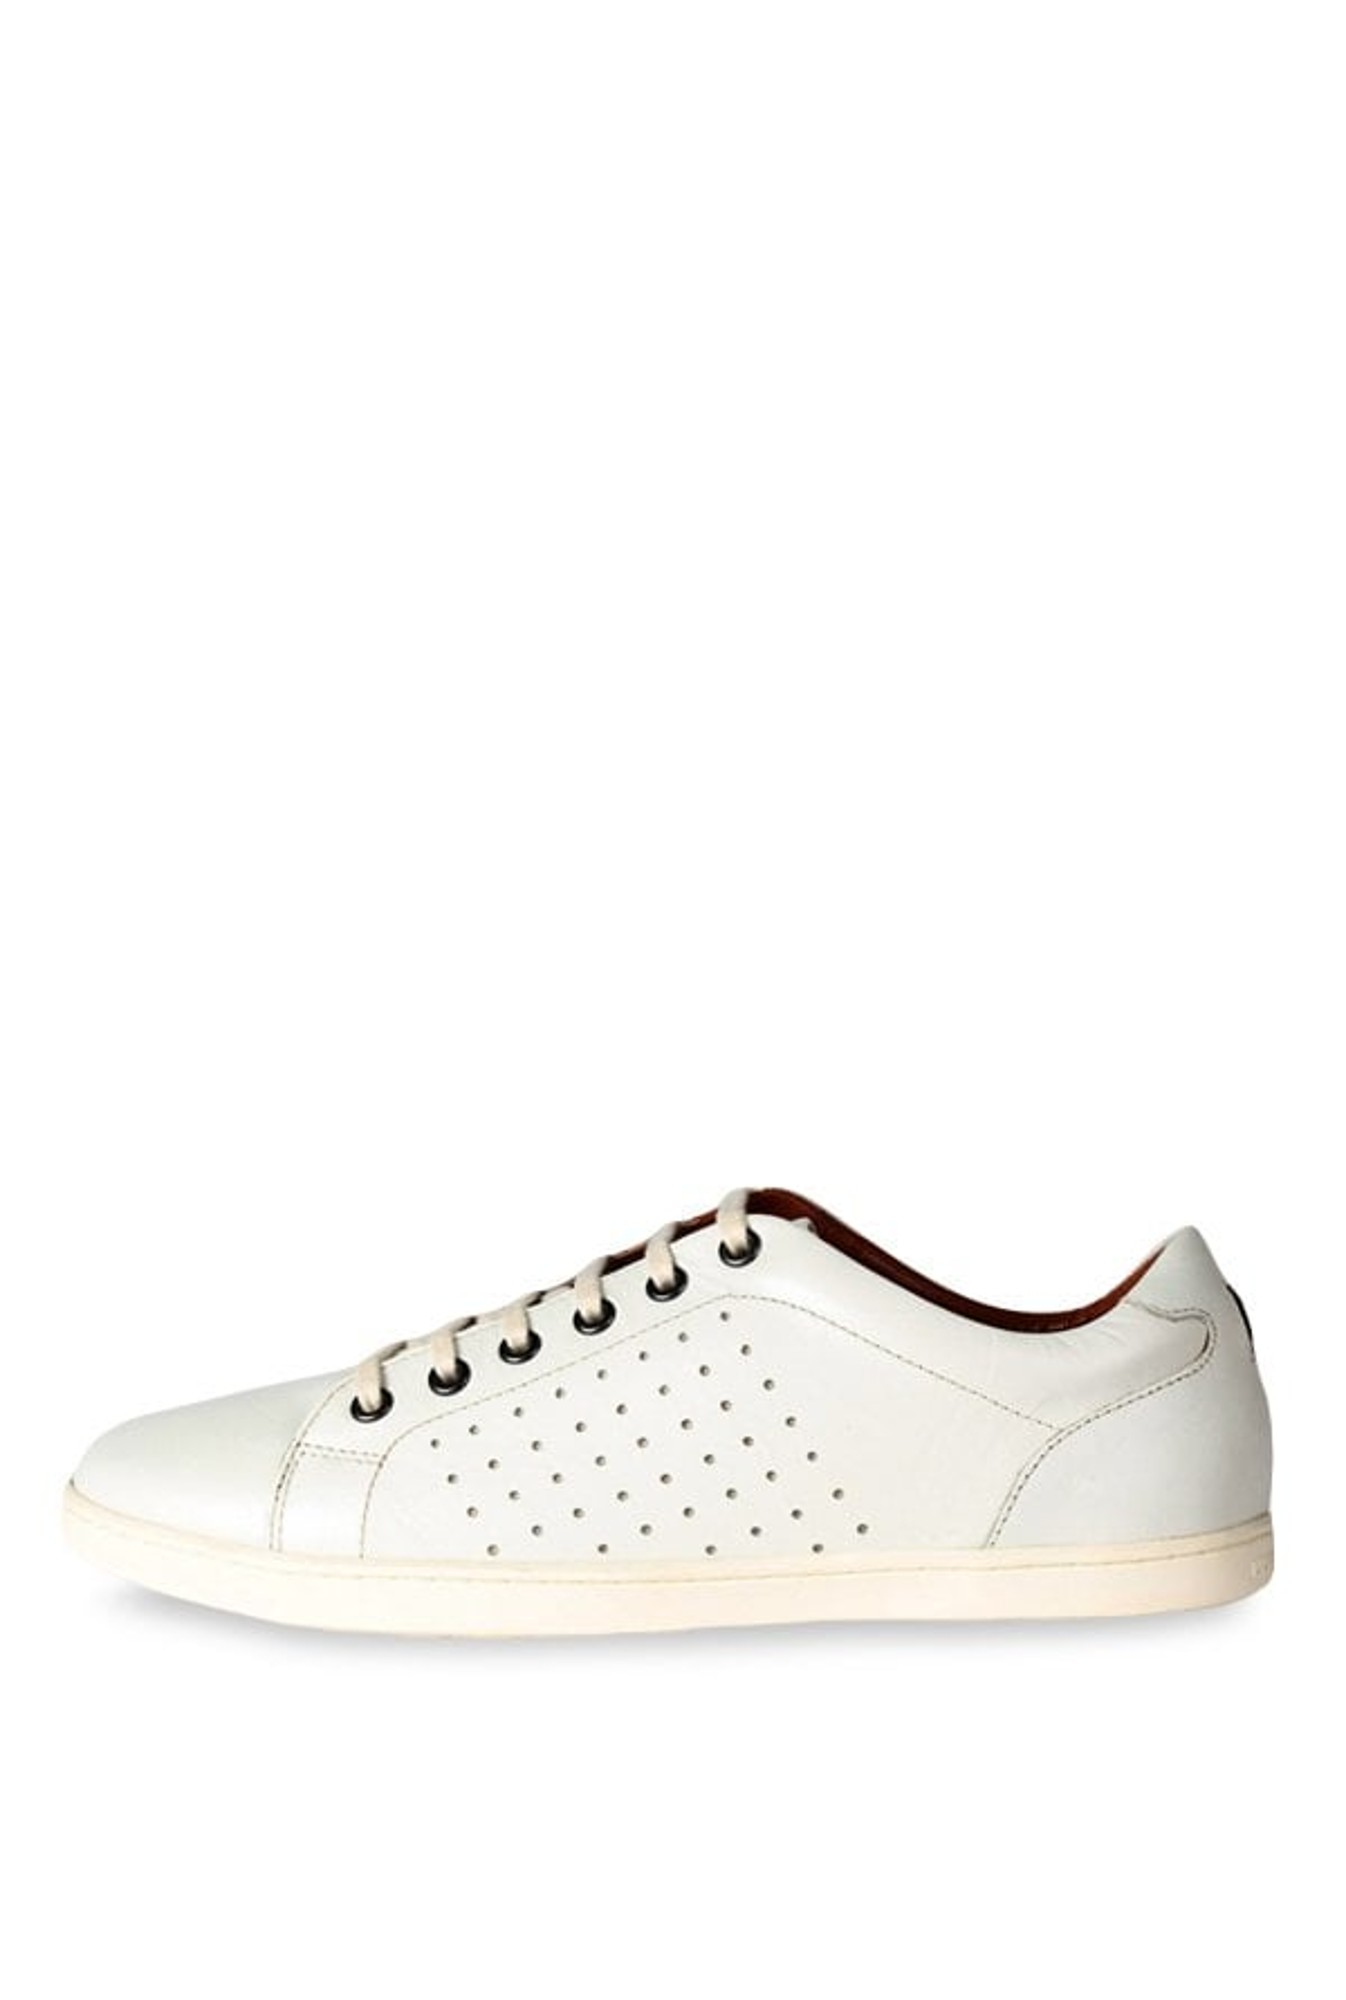 Buy Louis Philippe Sport Men's White Sneakers - 8 UK (42 EU)  (LYSCCRGFL00392_White) at Amazon.in